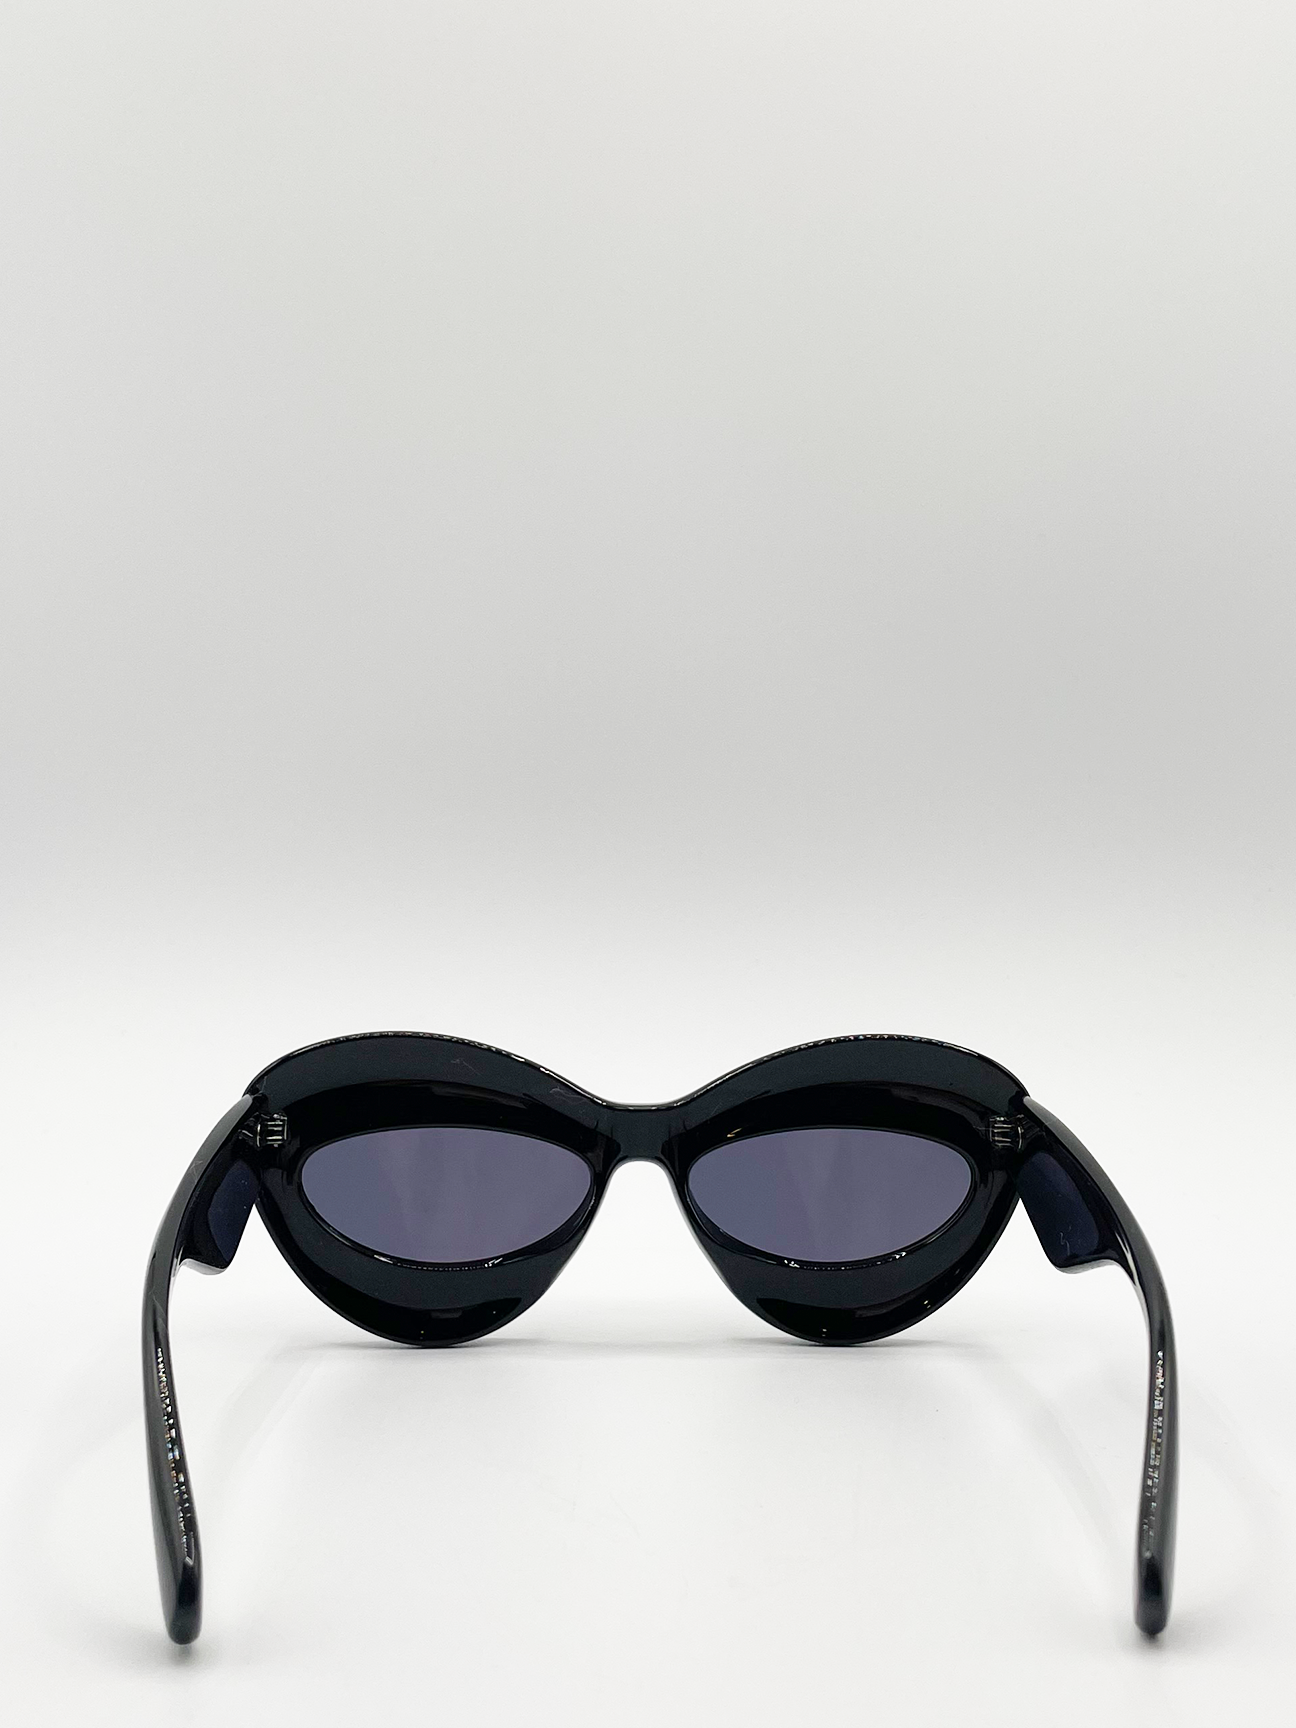 Chunky sunglasses in black